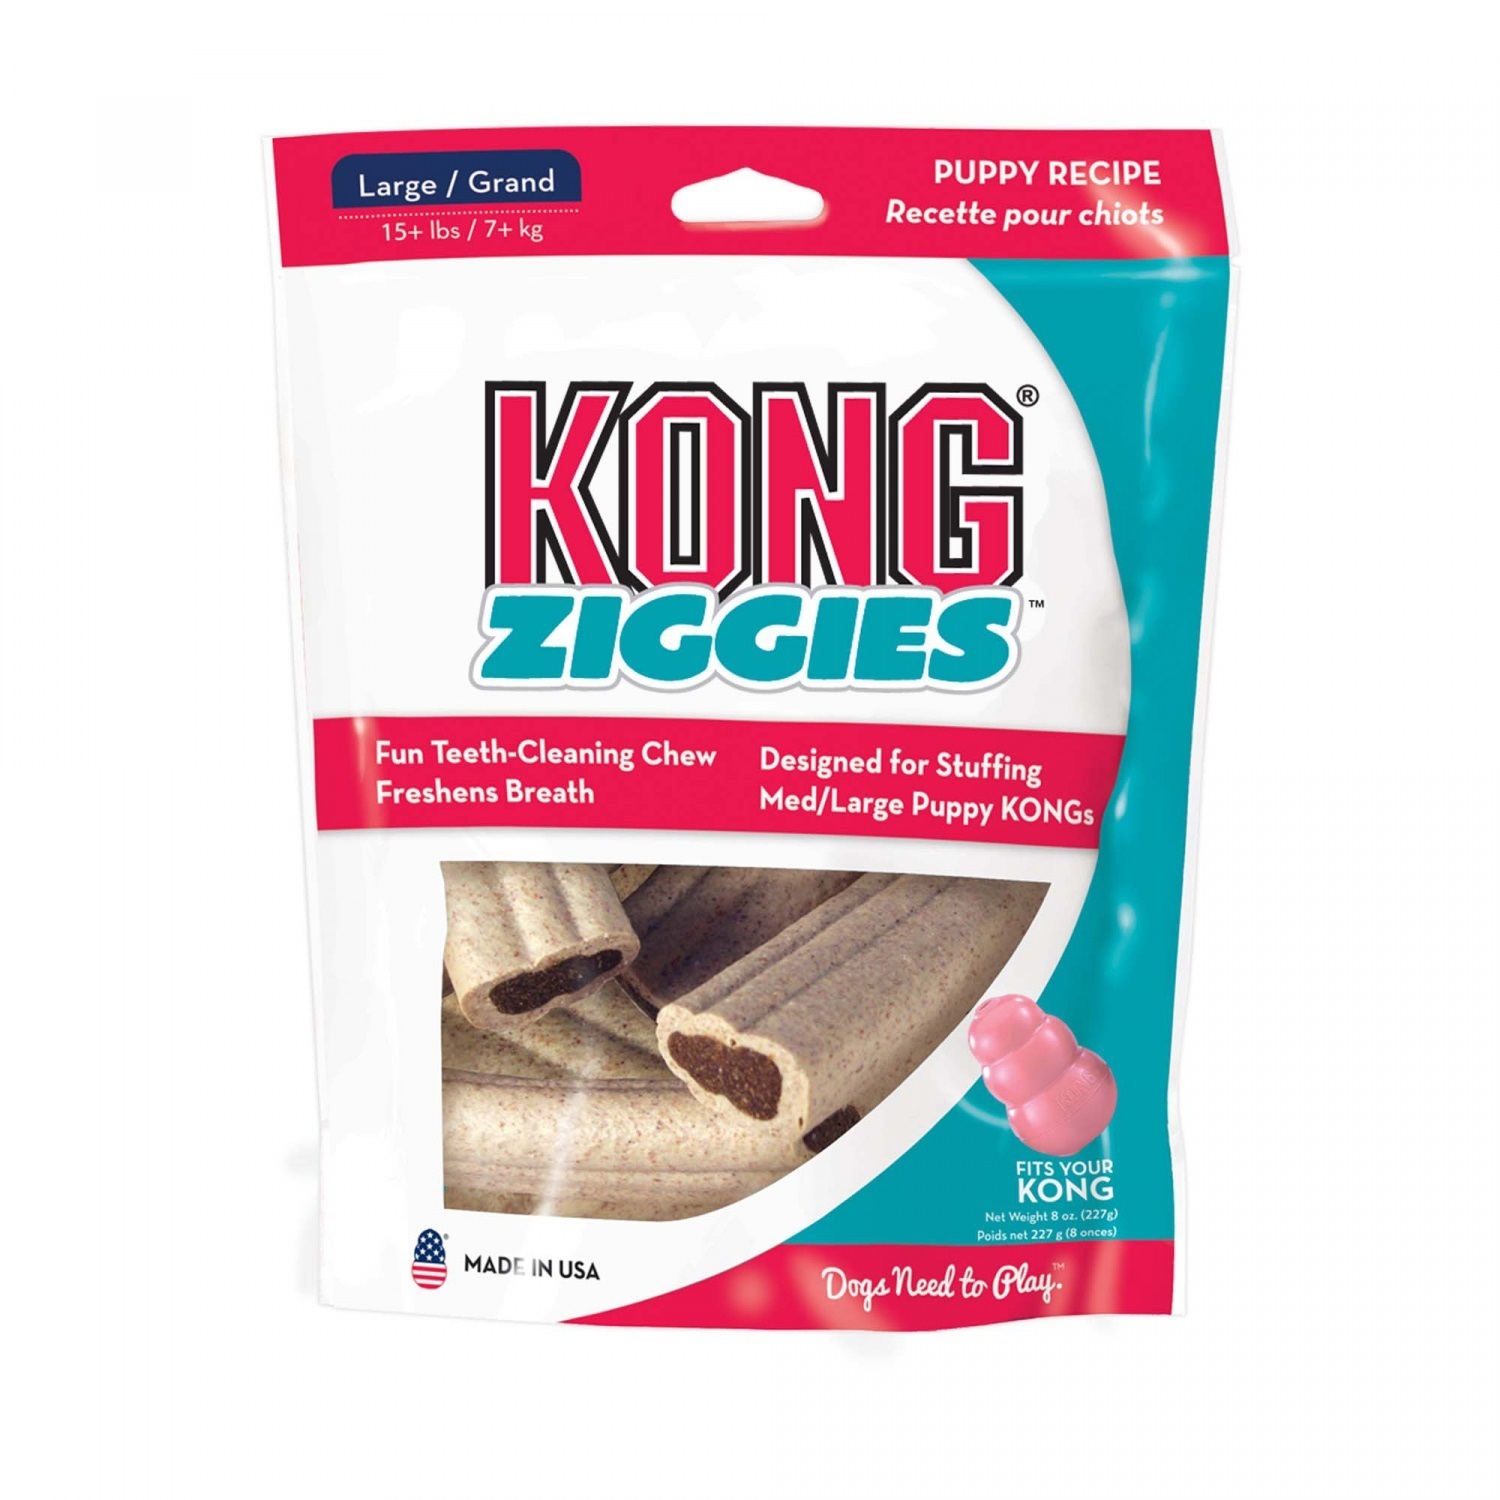 KONG Stuff'N Ziggies Puppy Recipe Breath Freshening Dog Treats - Made in USA - Small - 4 Packs image 0